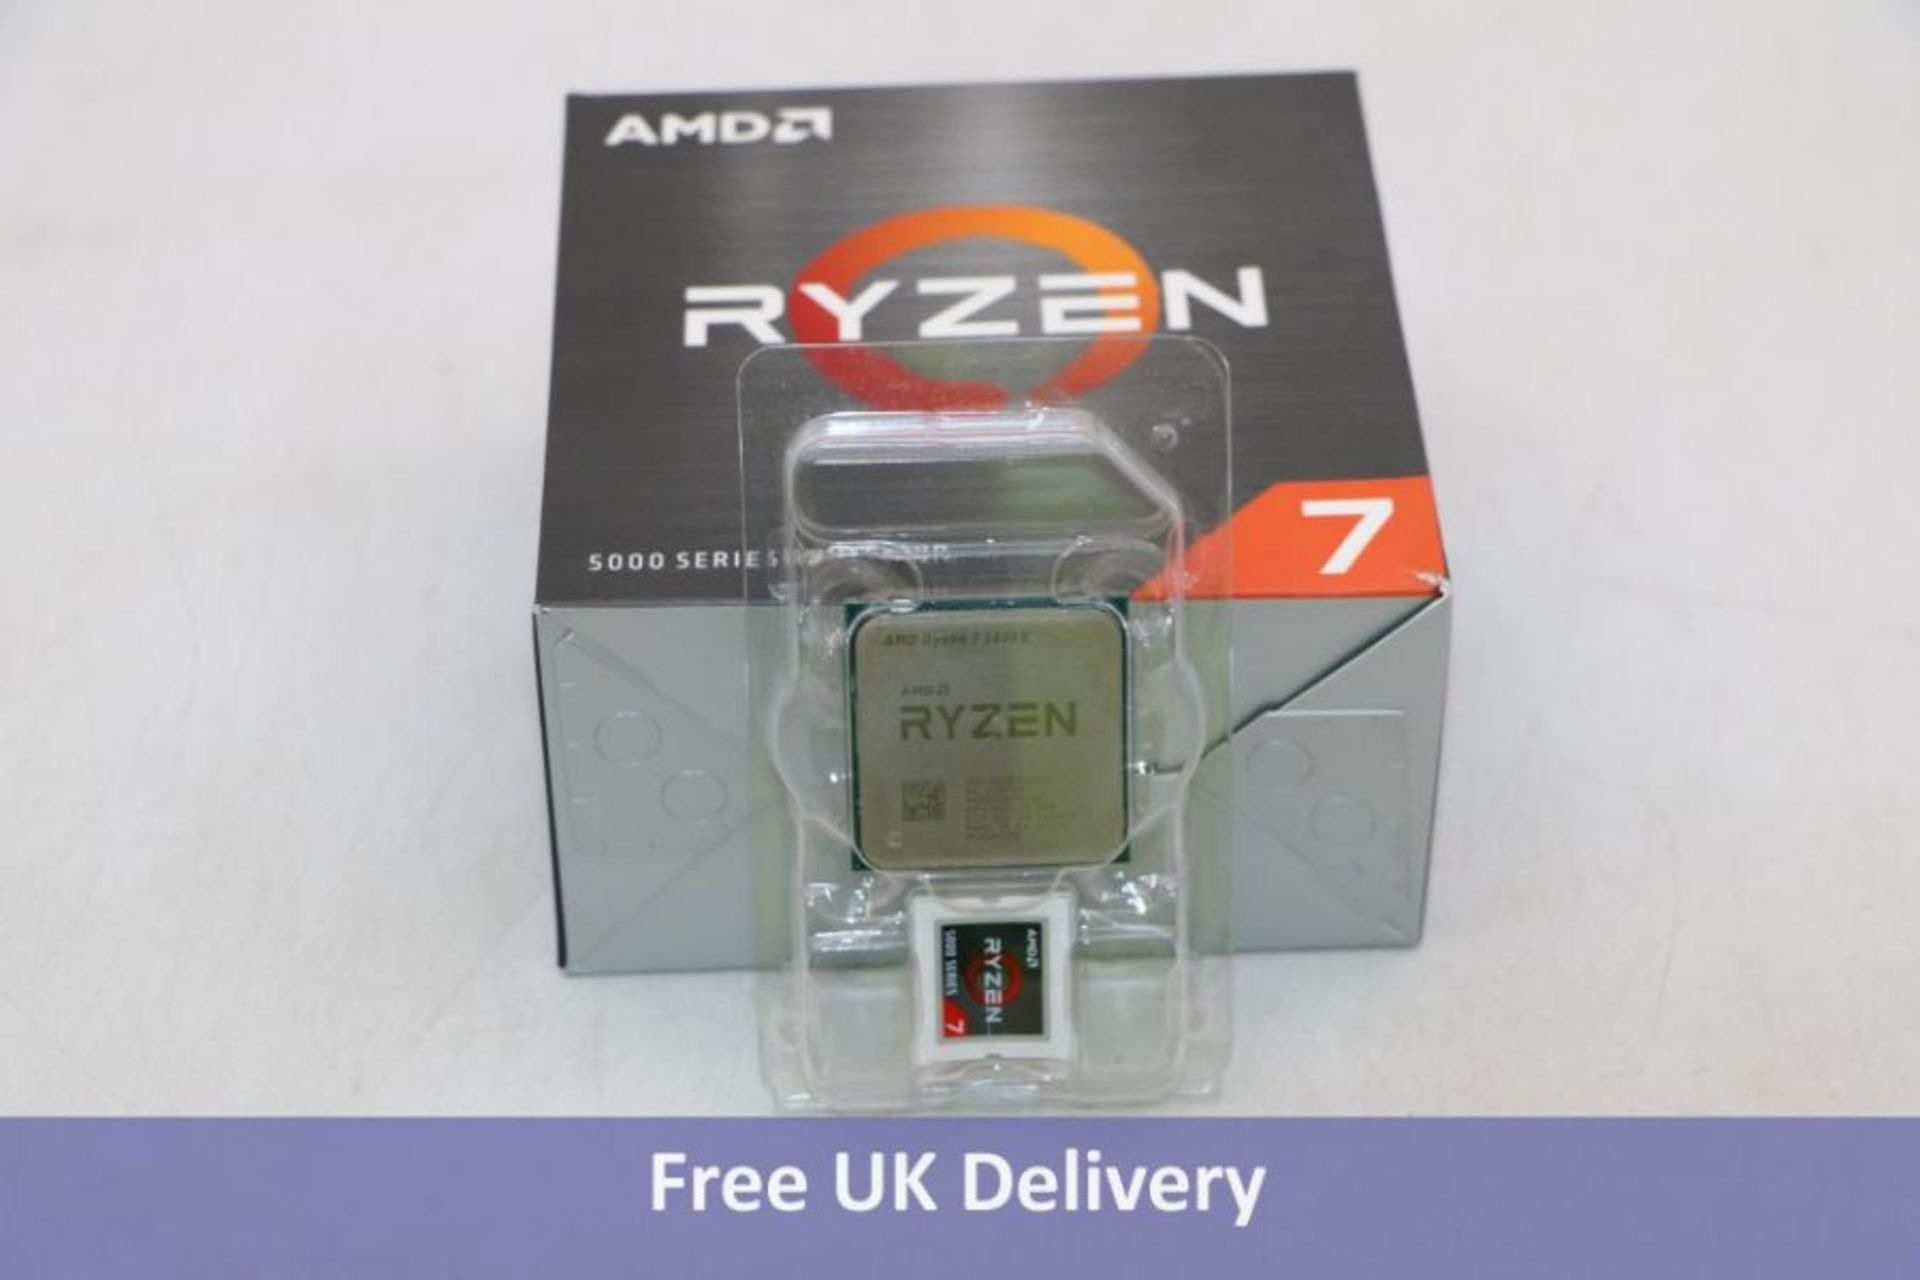 AMD Ryzen 7 5800X AM4 Processor. Boxed as new, box opened